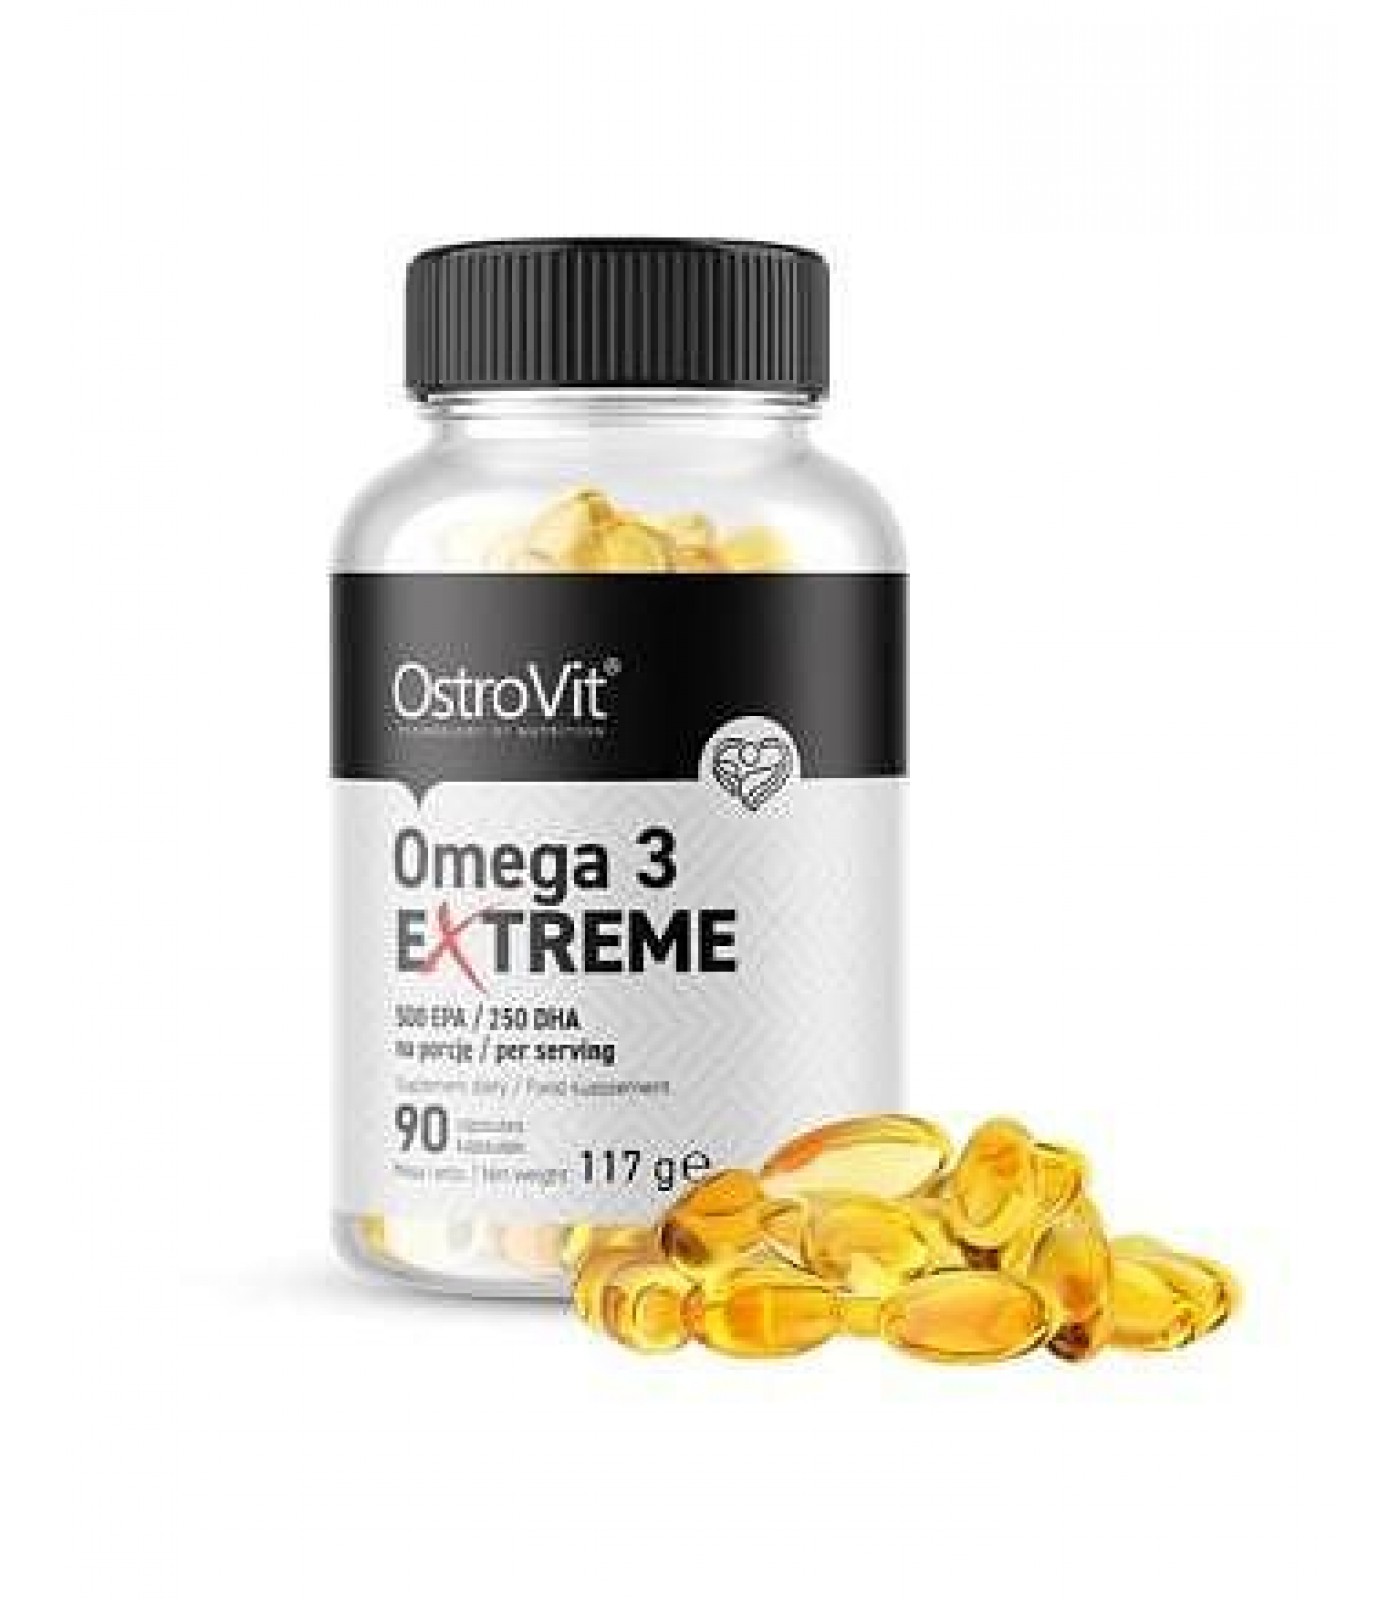 OstroVit Omega 3 Extreme | 75% EPA + DHA / 90softgels